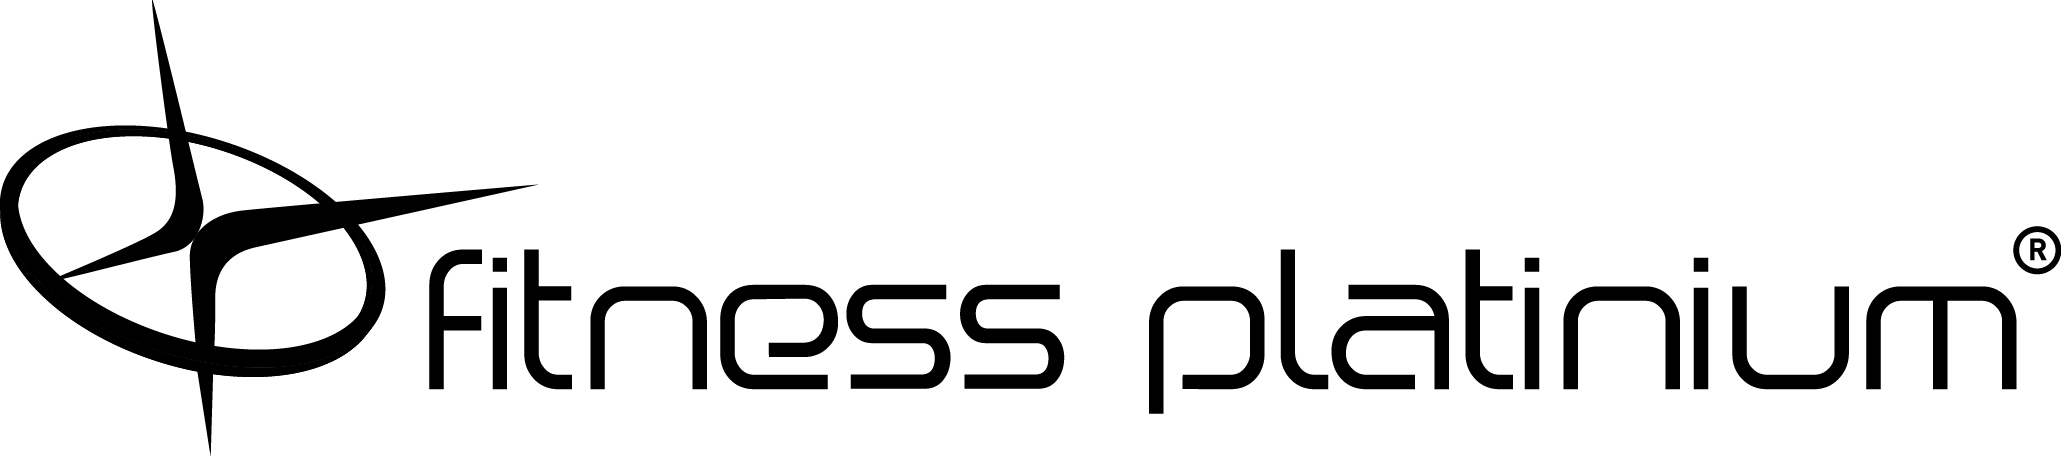 Fitness Platinium logo